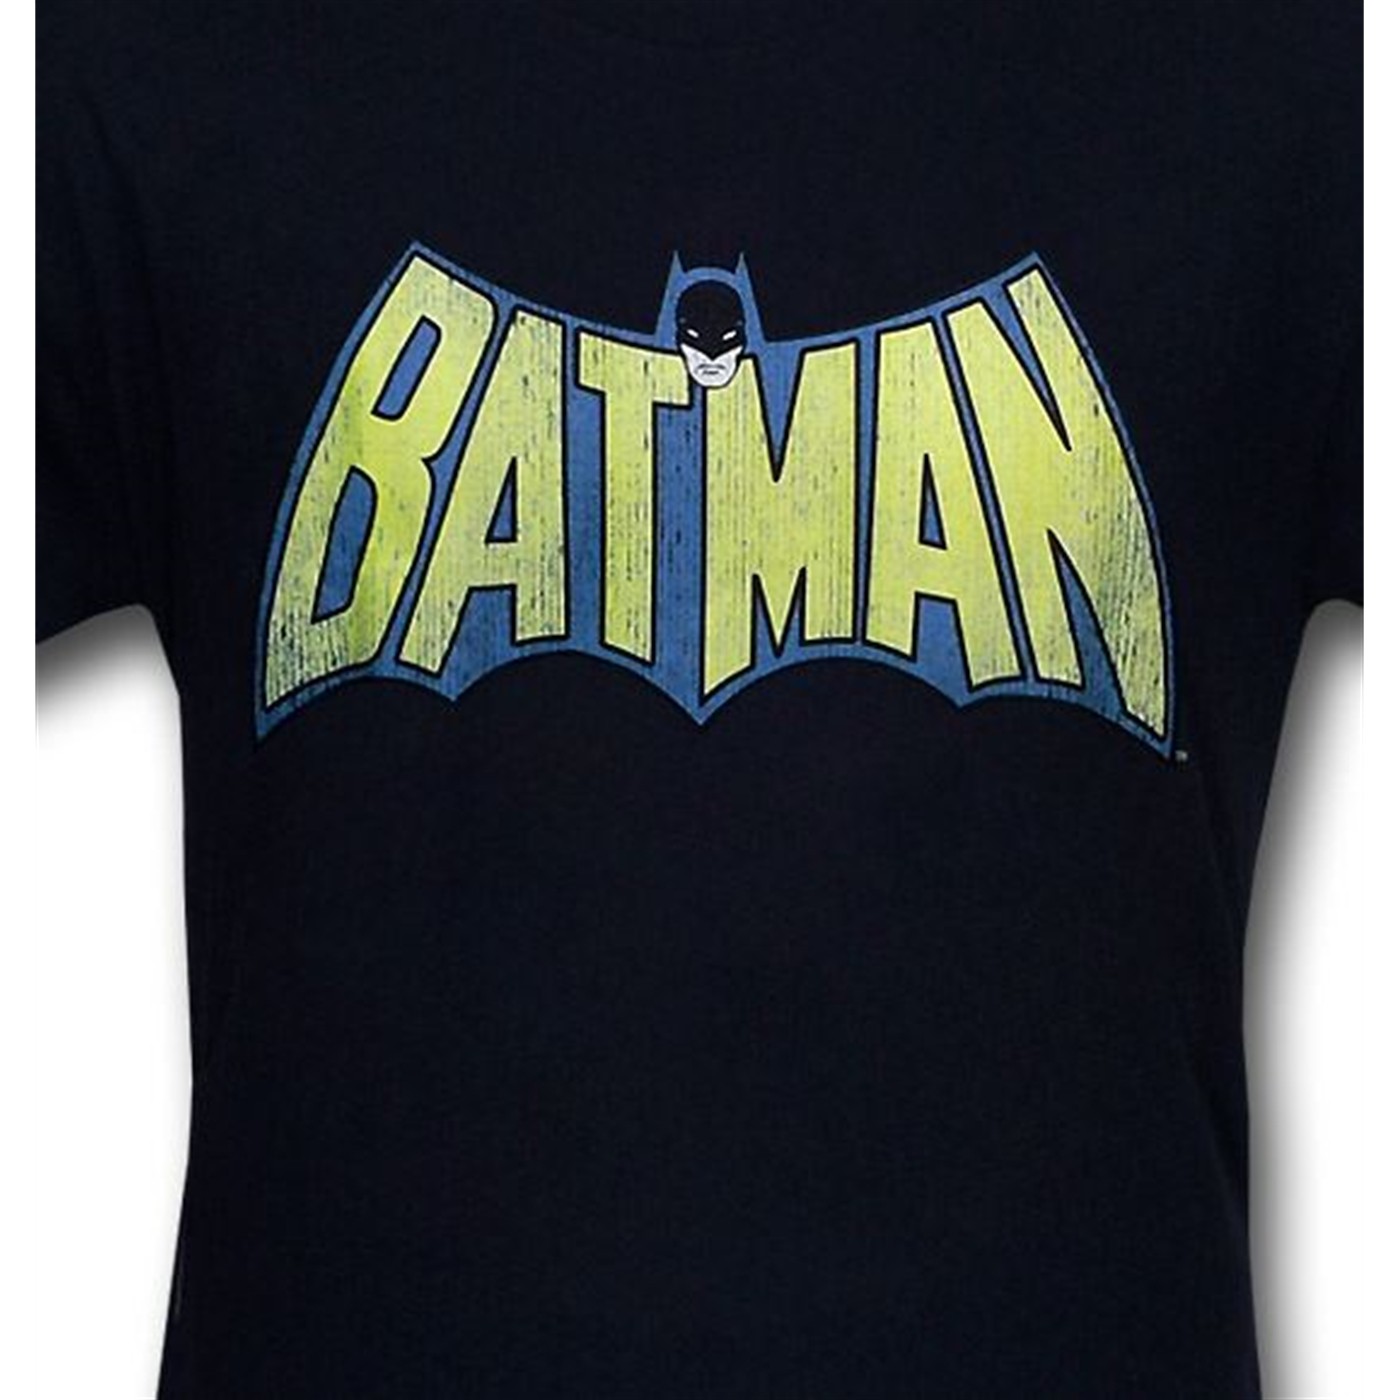 Batman Distressed Logo Navy Kids T-Shirt